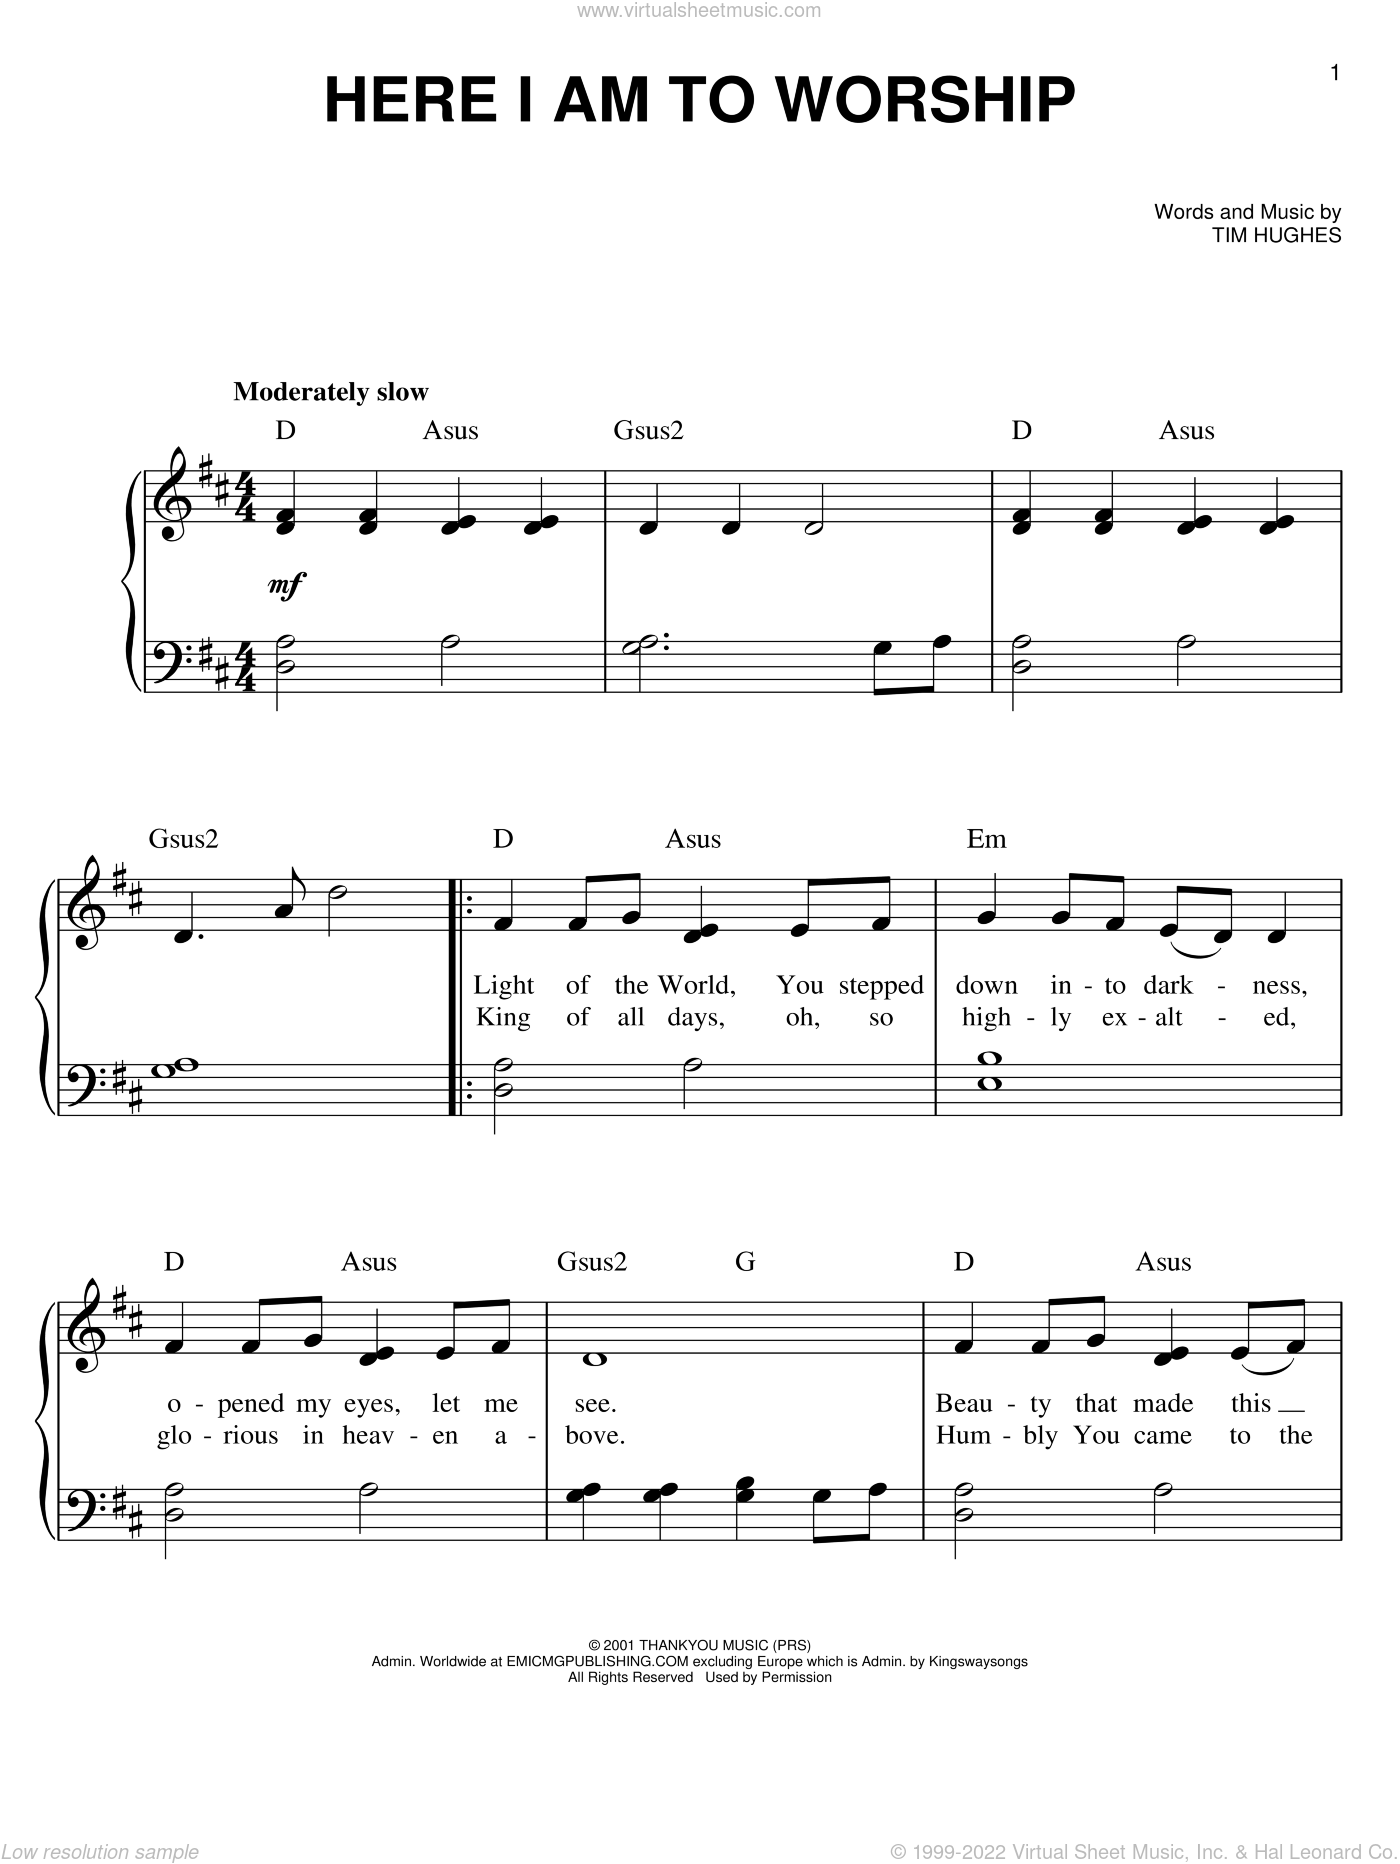 Free Printable Piano Sheet Music Christian Songs Printable Templates